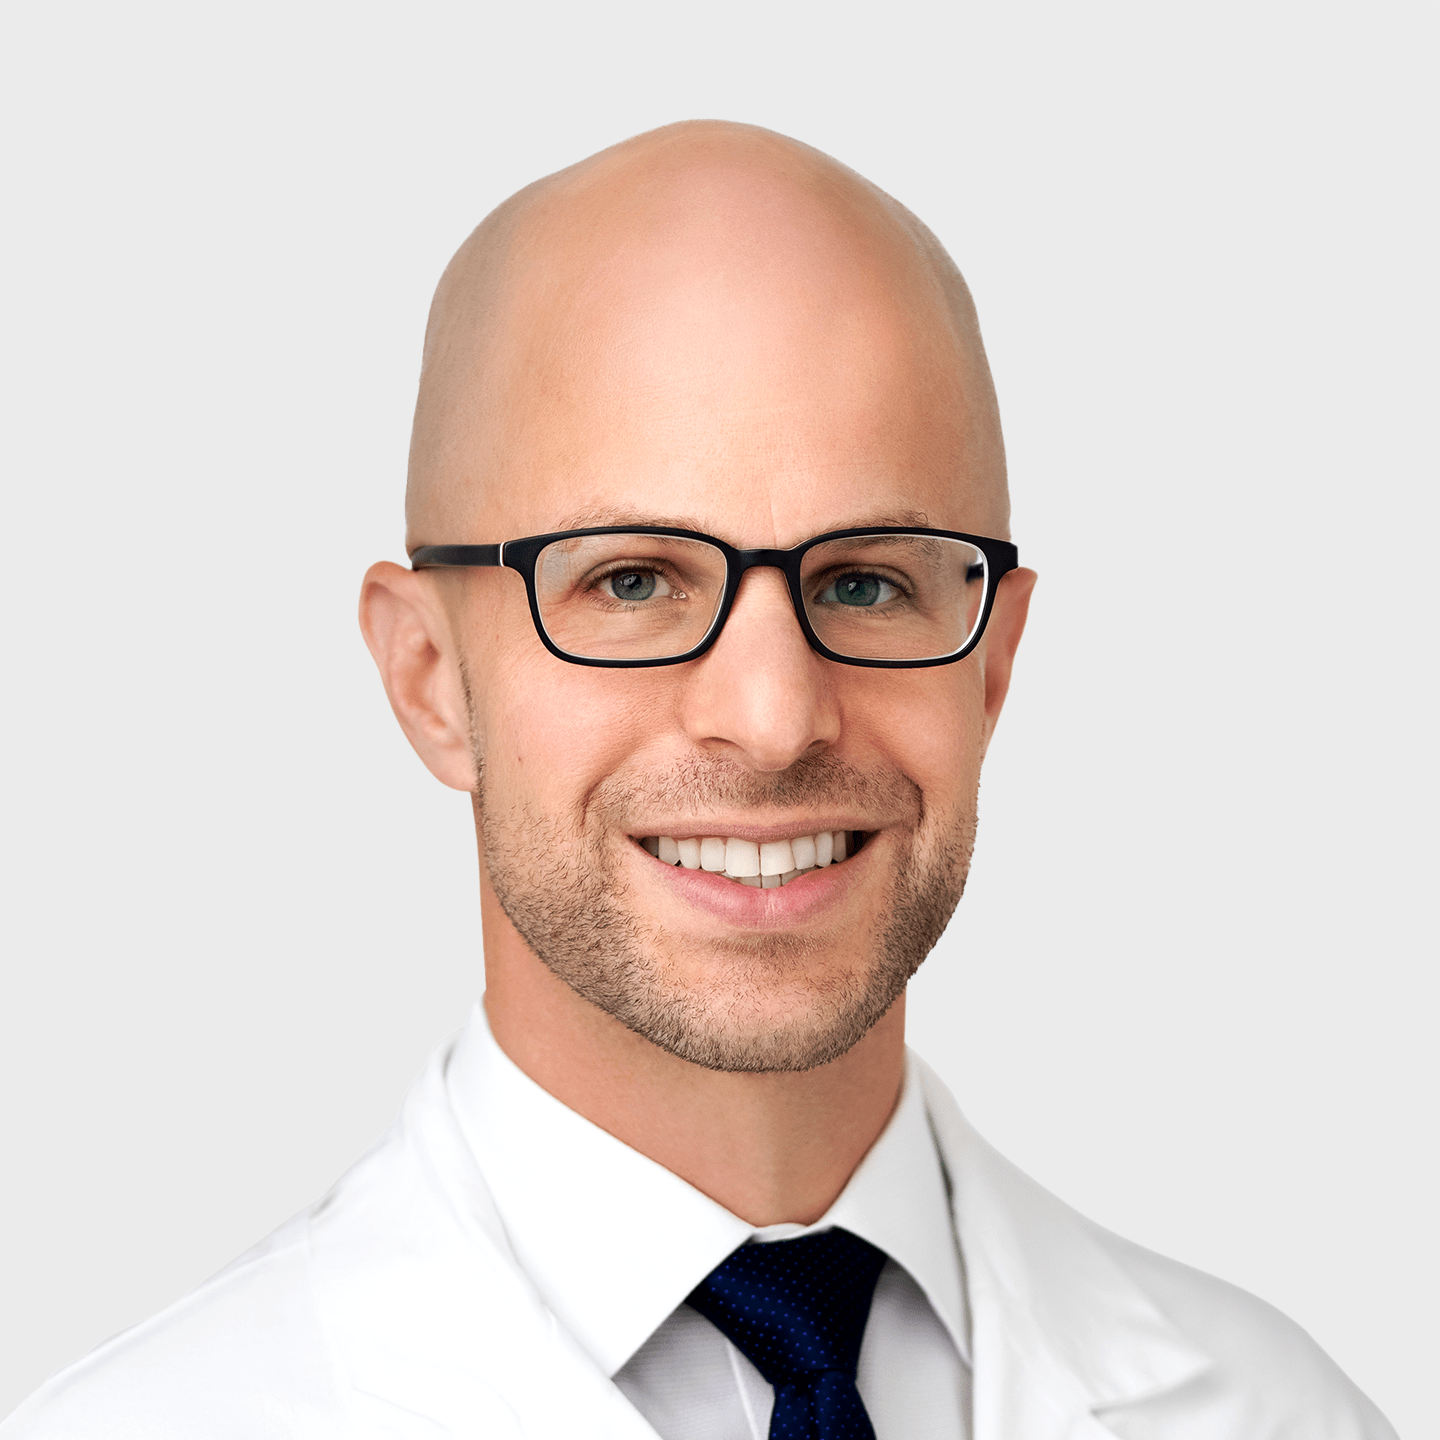 Physician Spotlight on Dr. Marc Otten